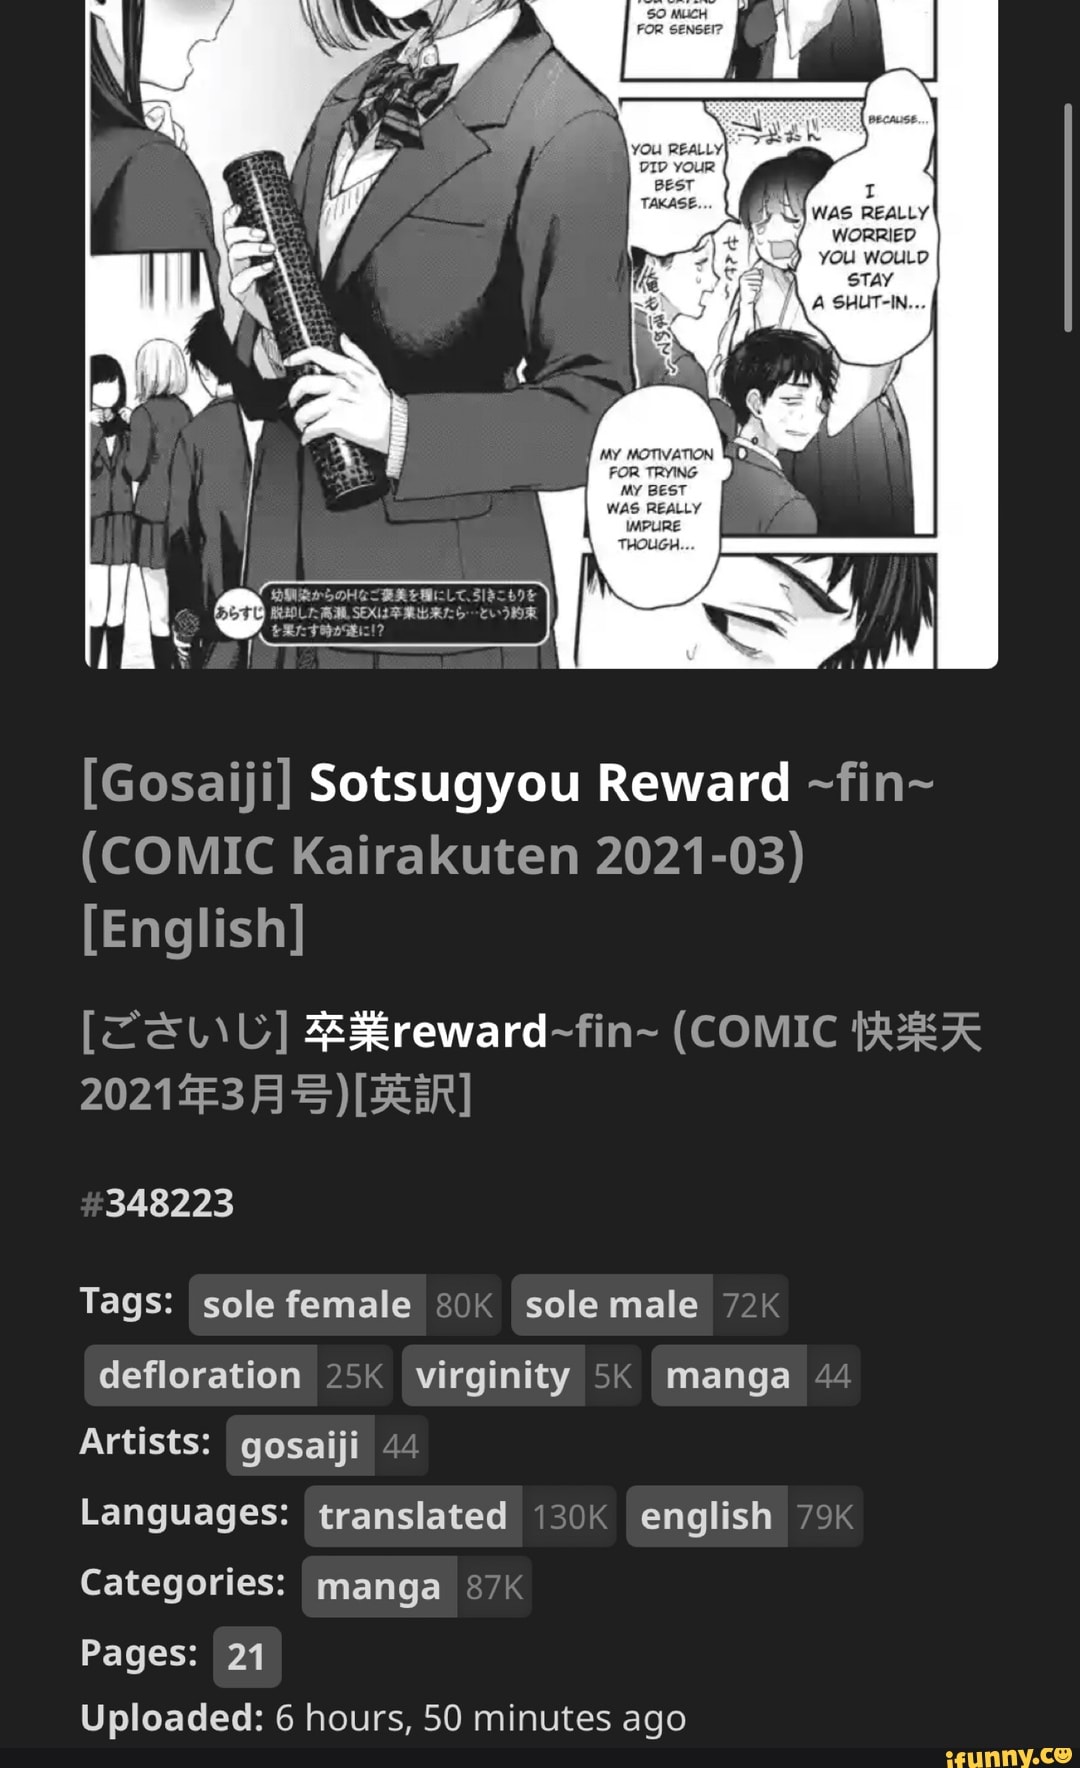 My BEST WAS REALLY THOUGH... [Gosaiji] Sotsugyou Reward fin